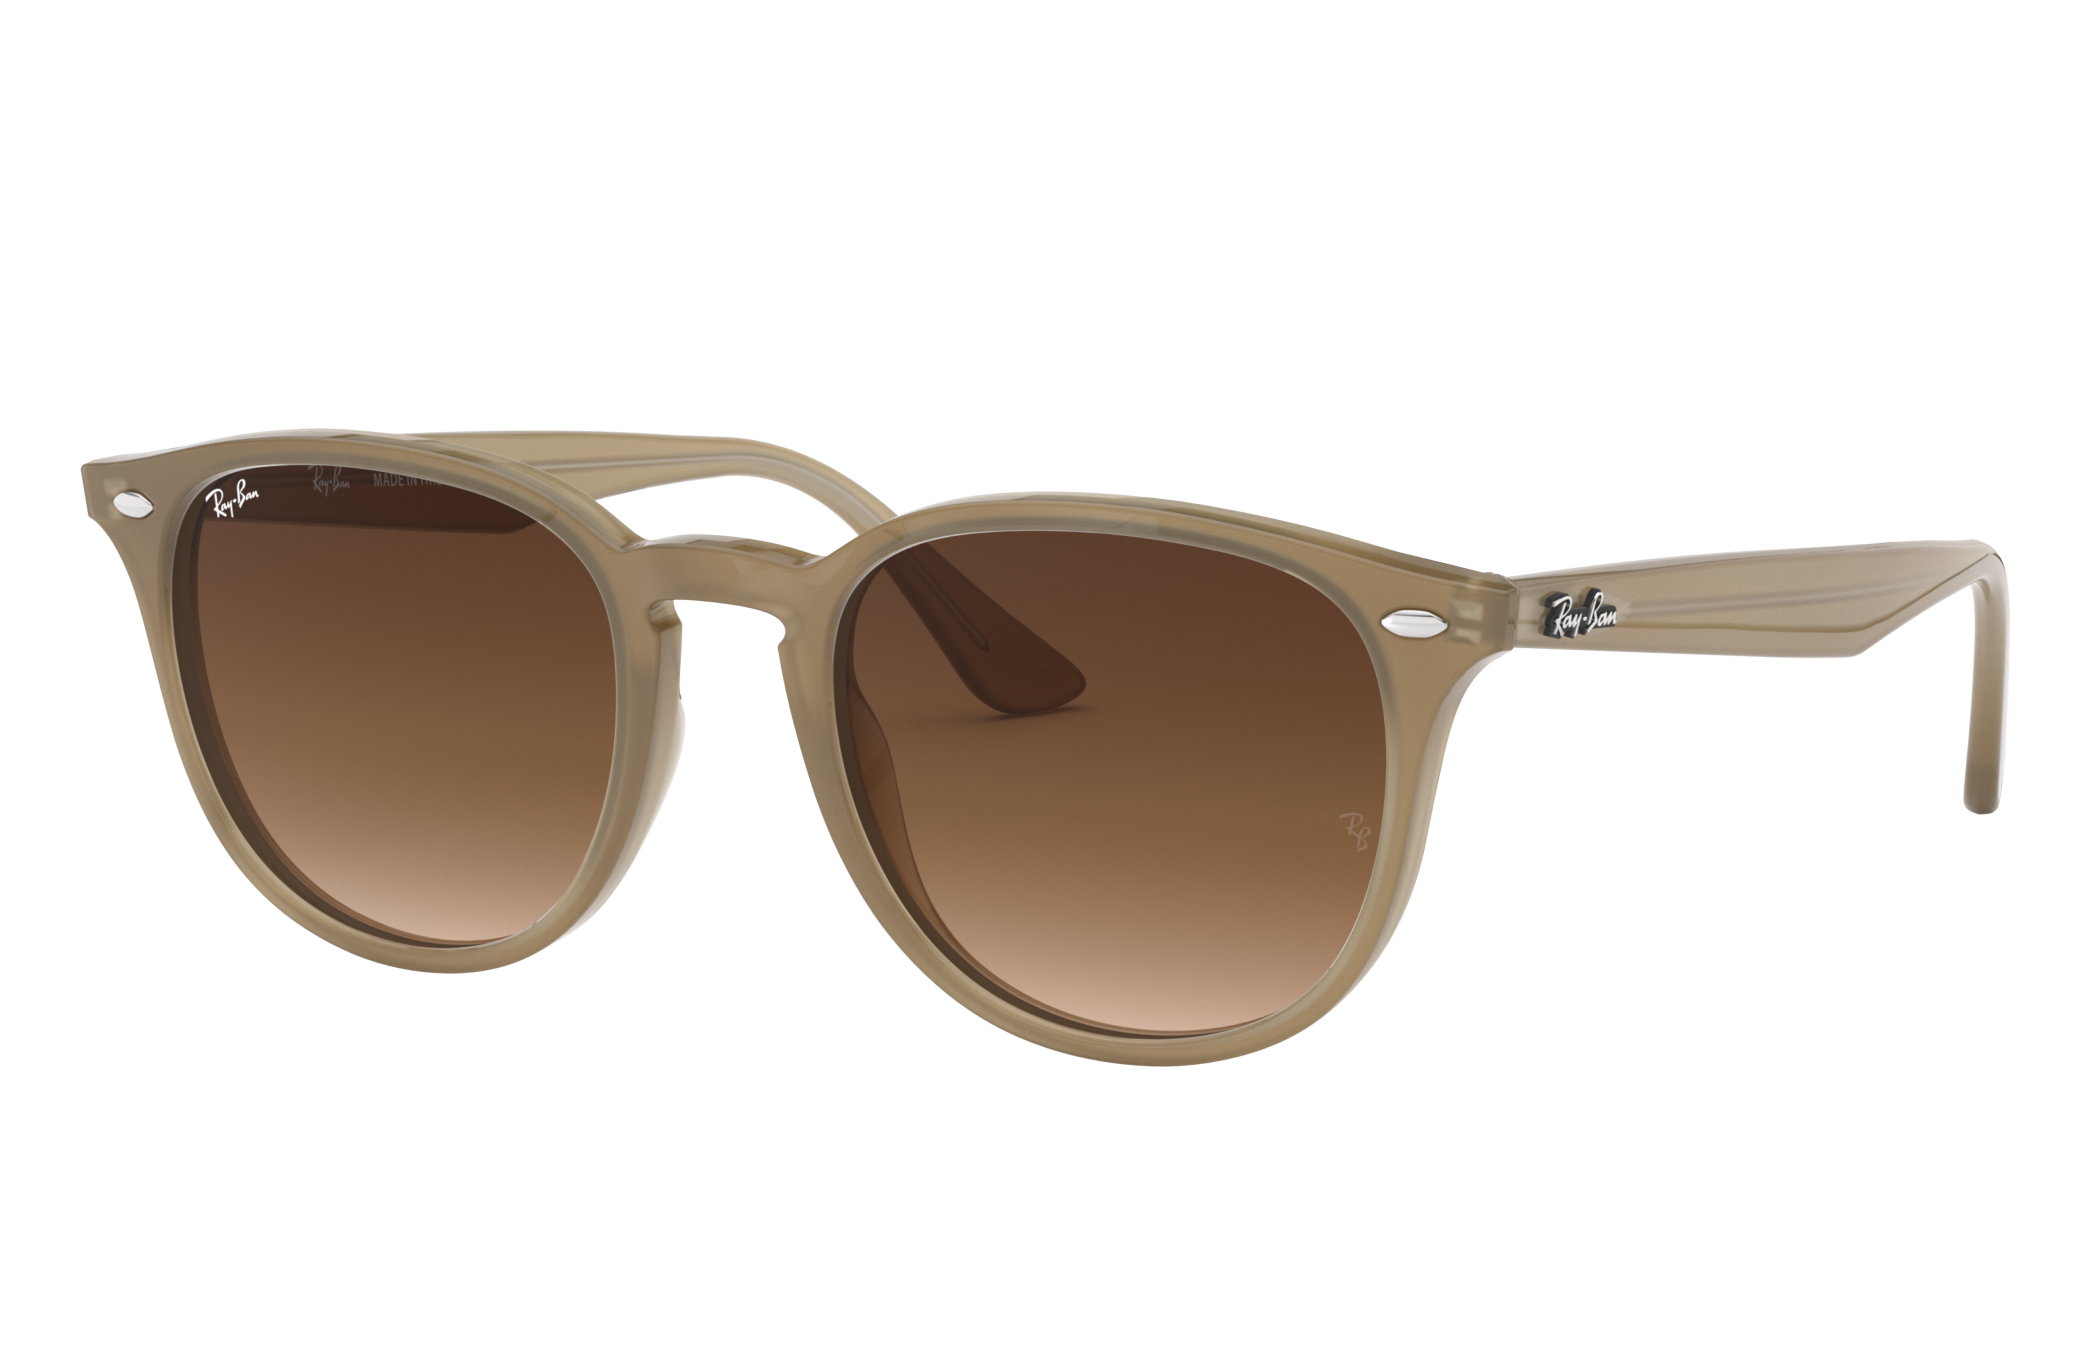 Sunglasses in Beige Brown |